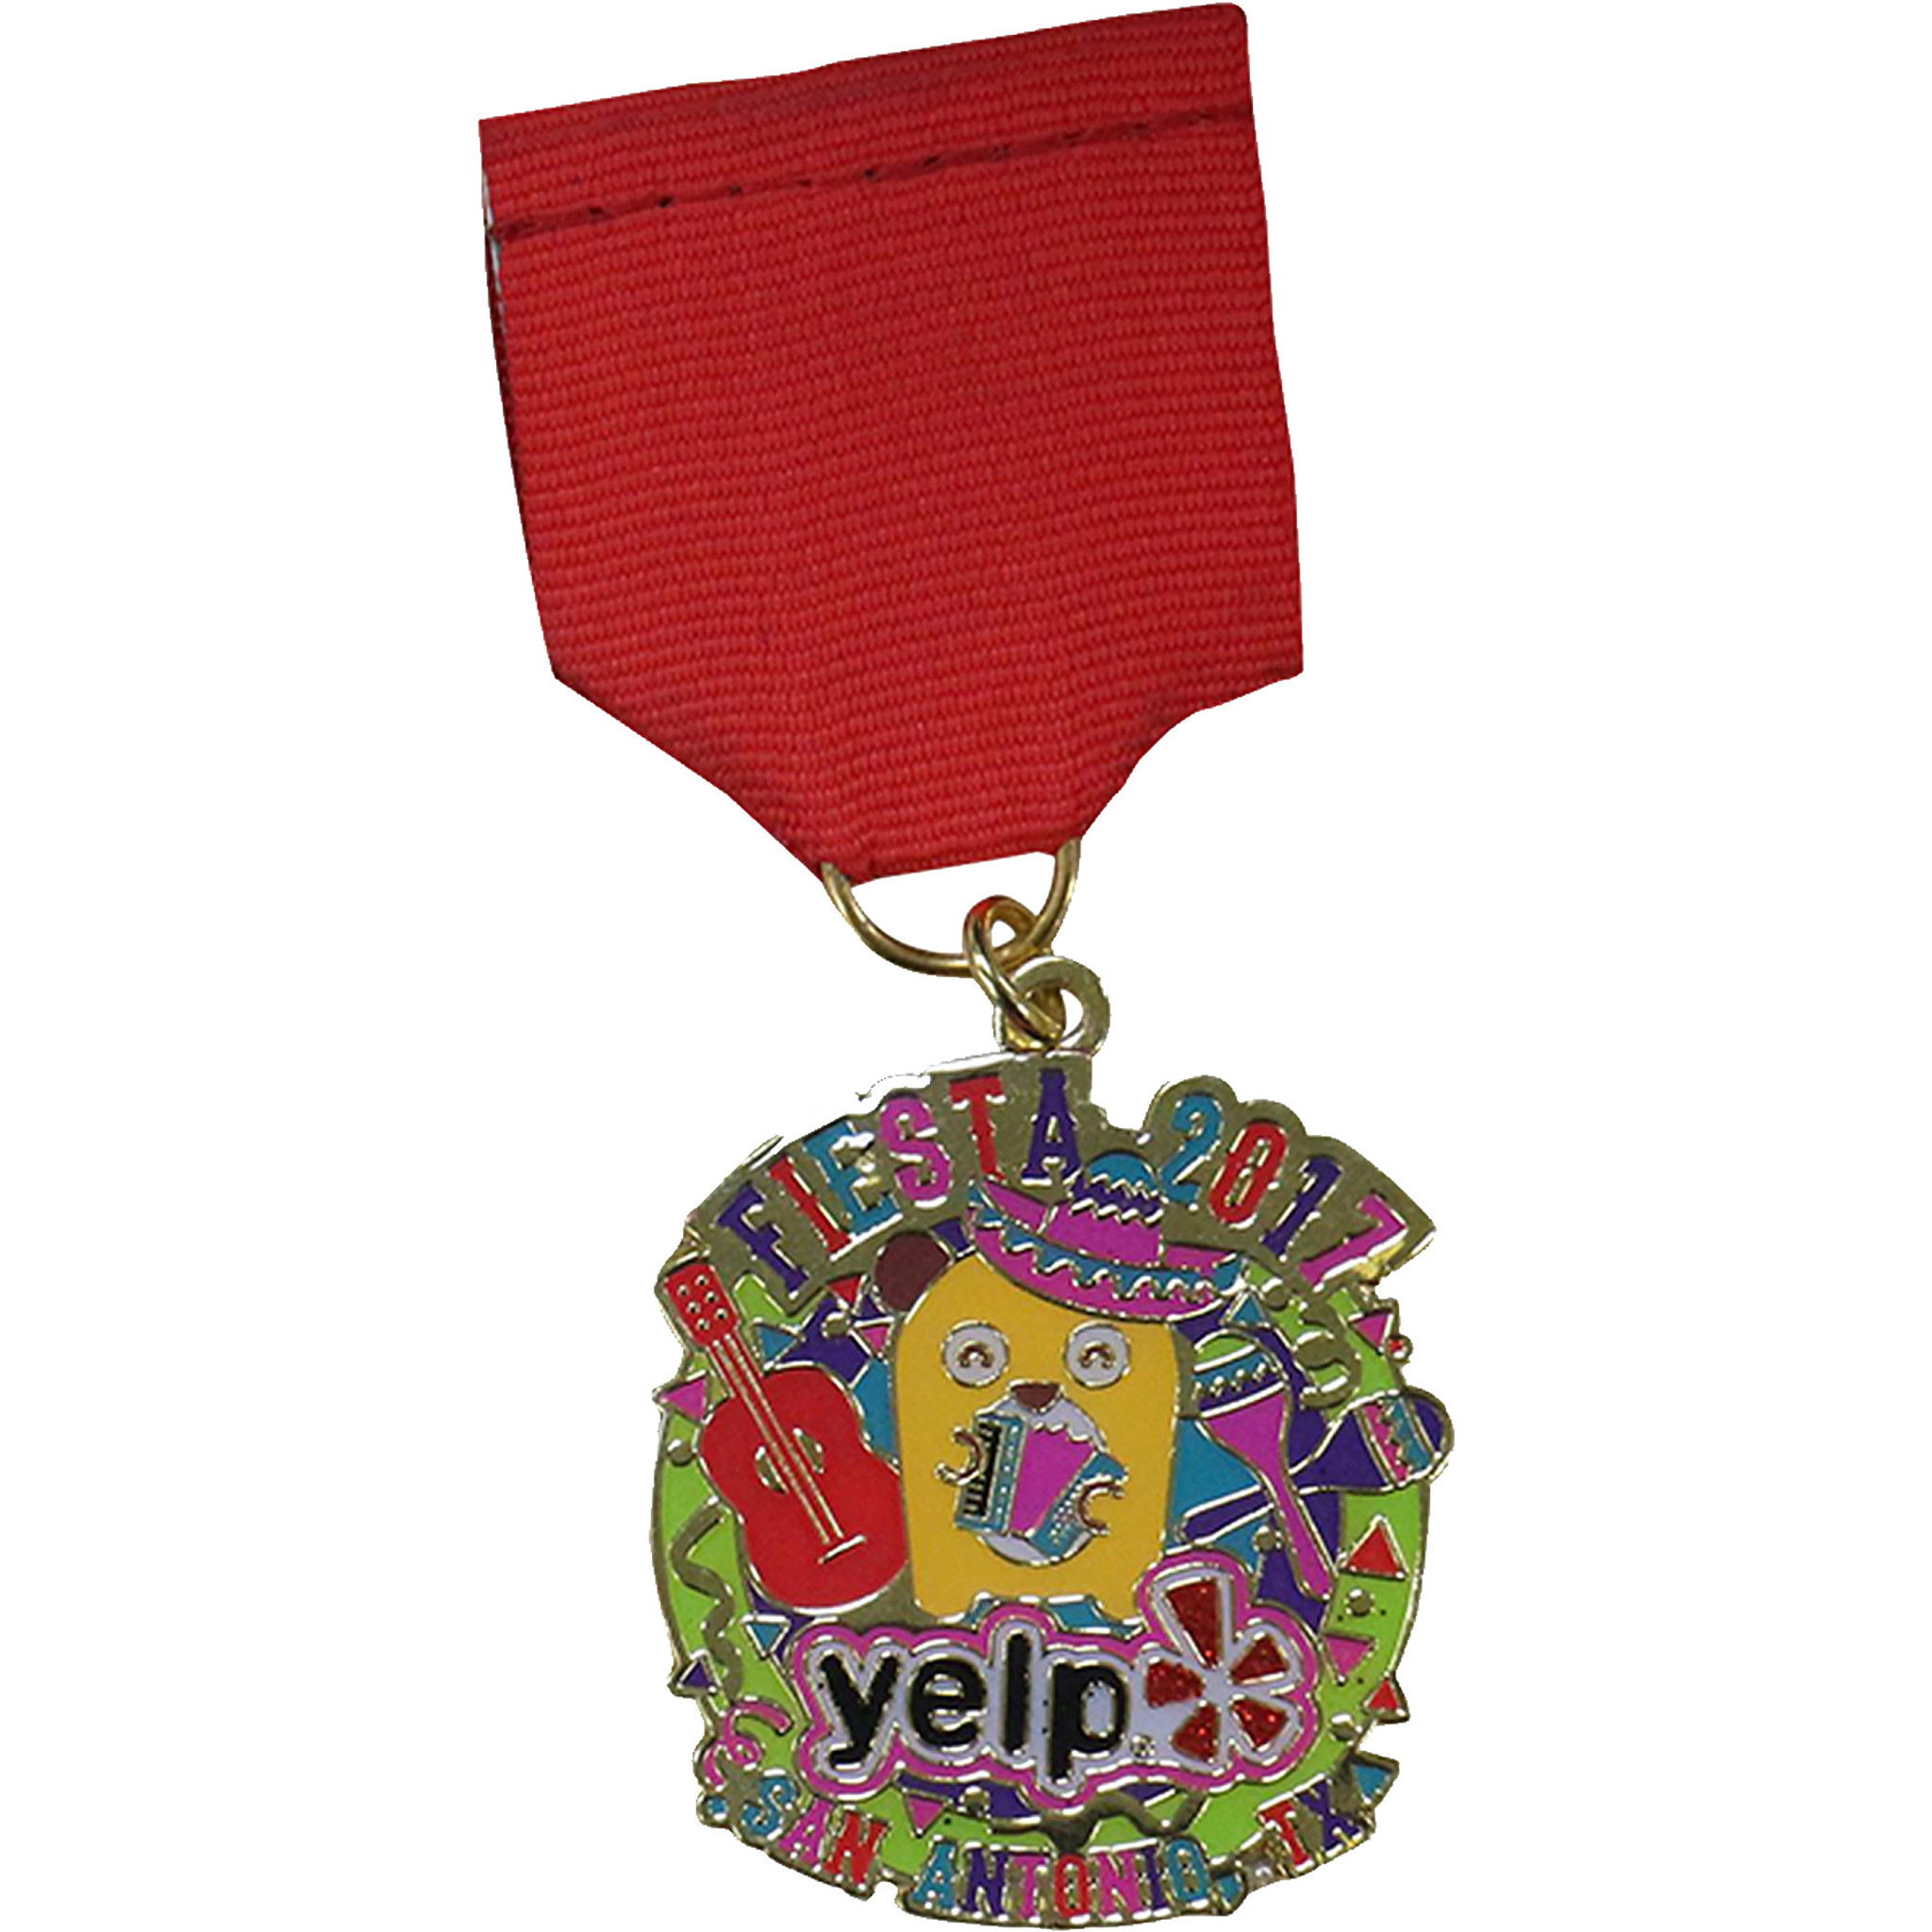 Fiesta Medals